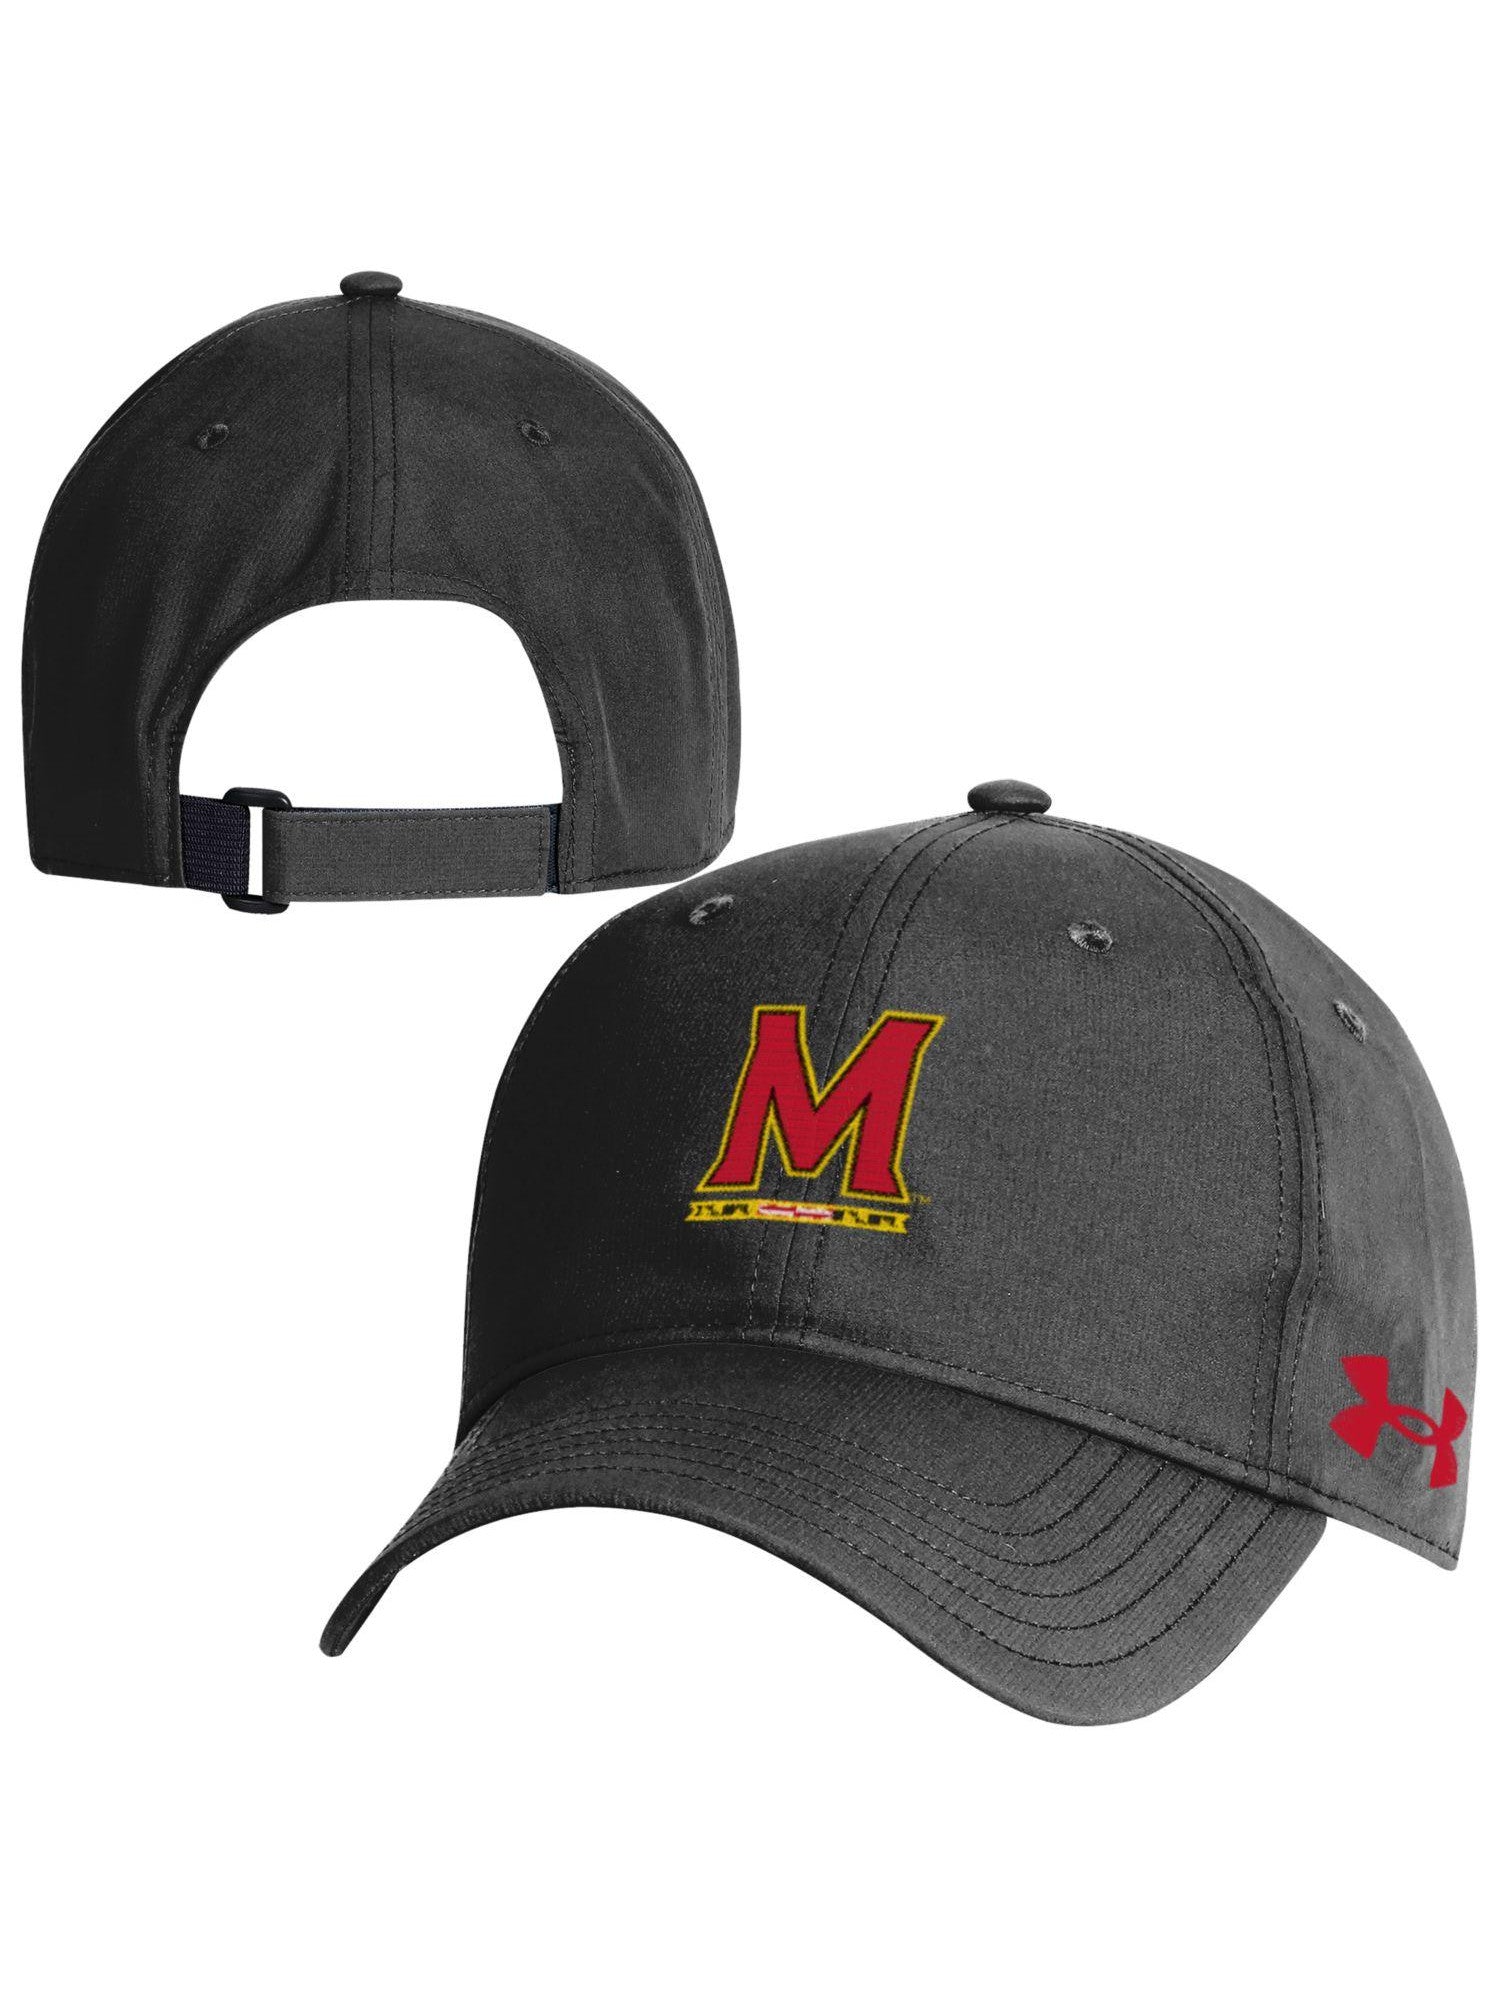 Under Armor University of Maryland Baseball Cap (Black)